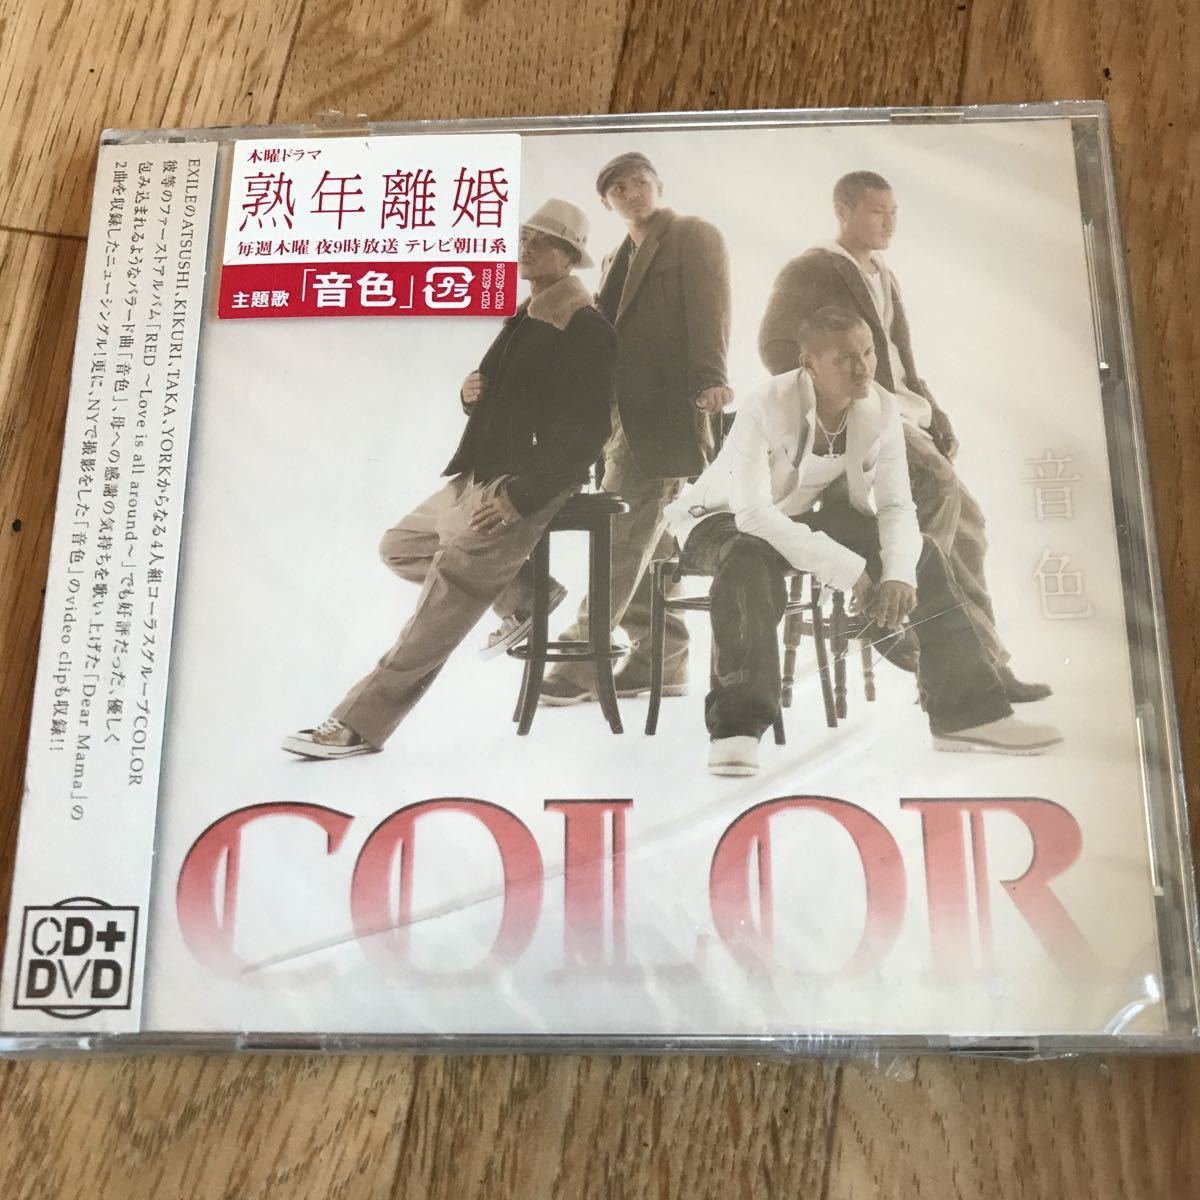 COLOR CD+DVD